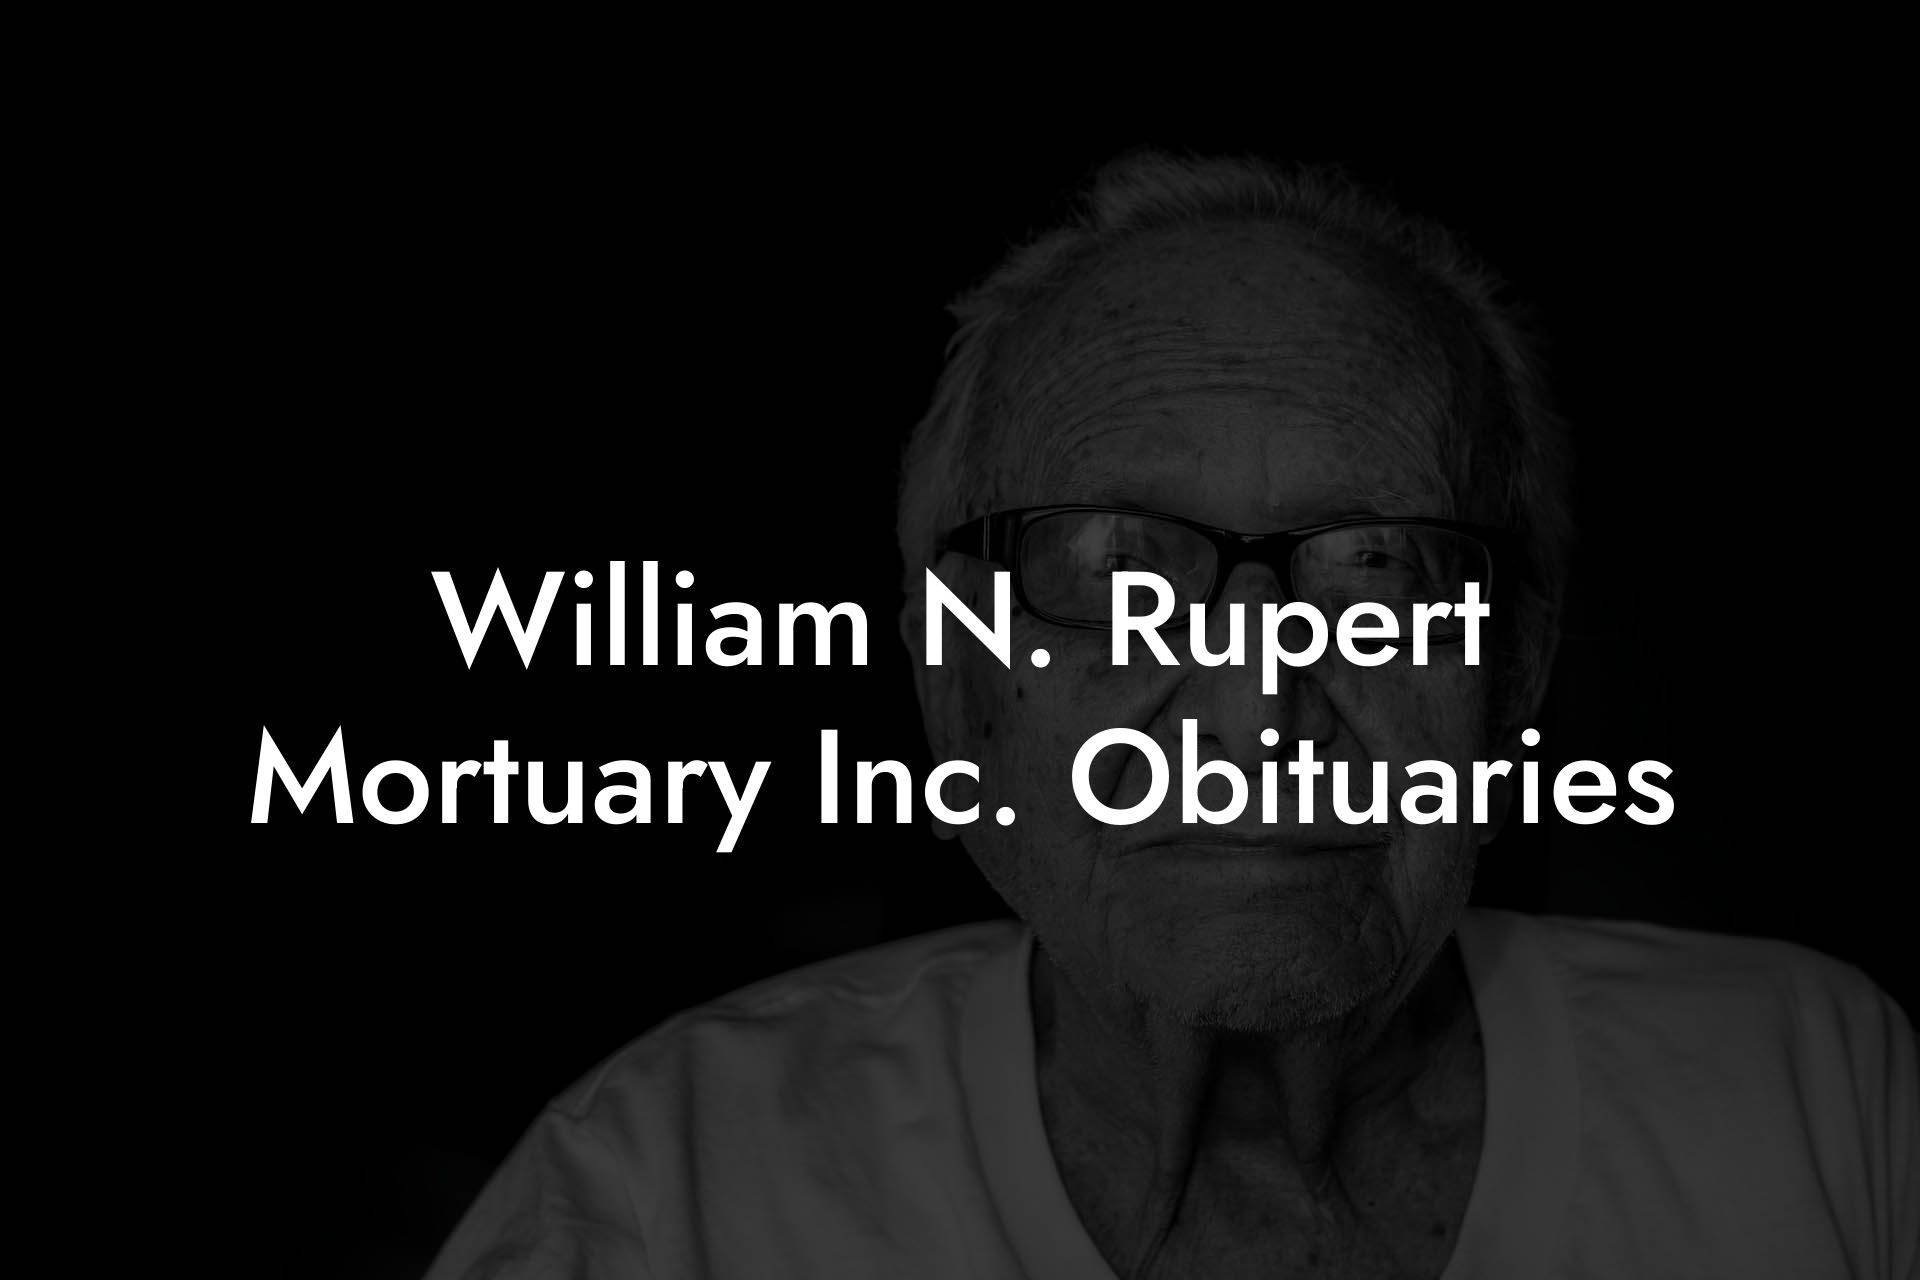 William N. Rupert Mortuary Inc. Obituaries